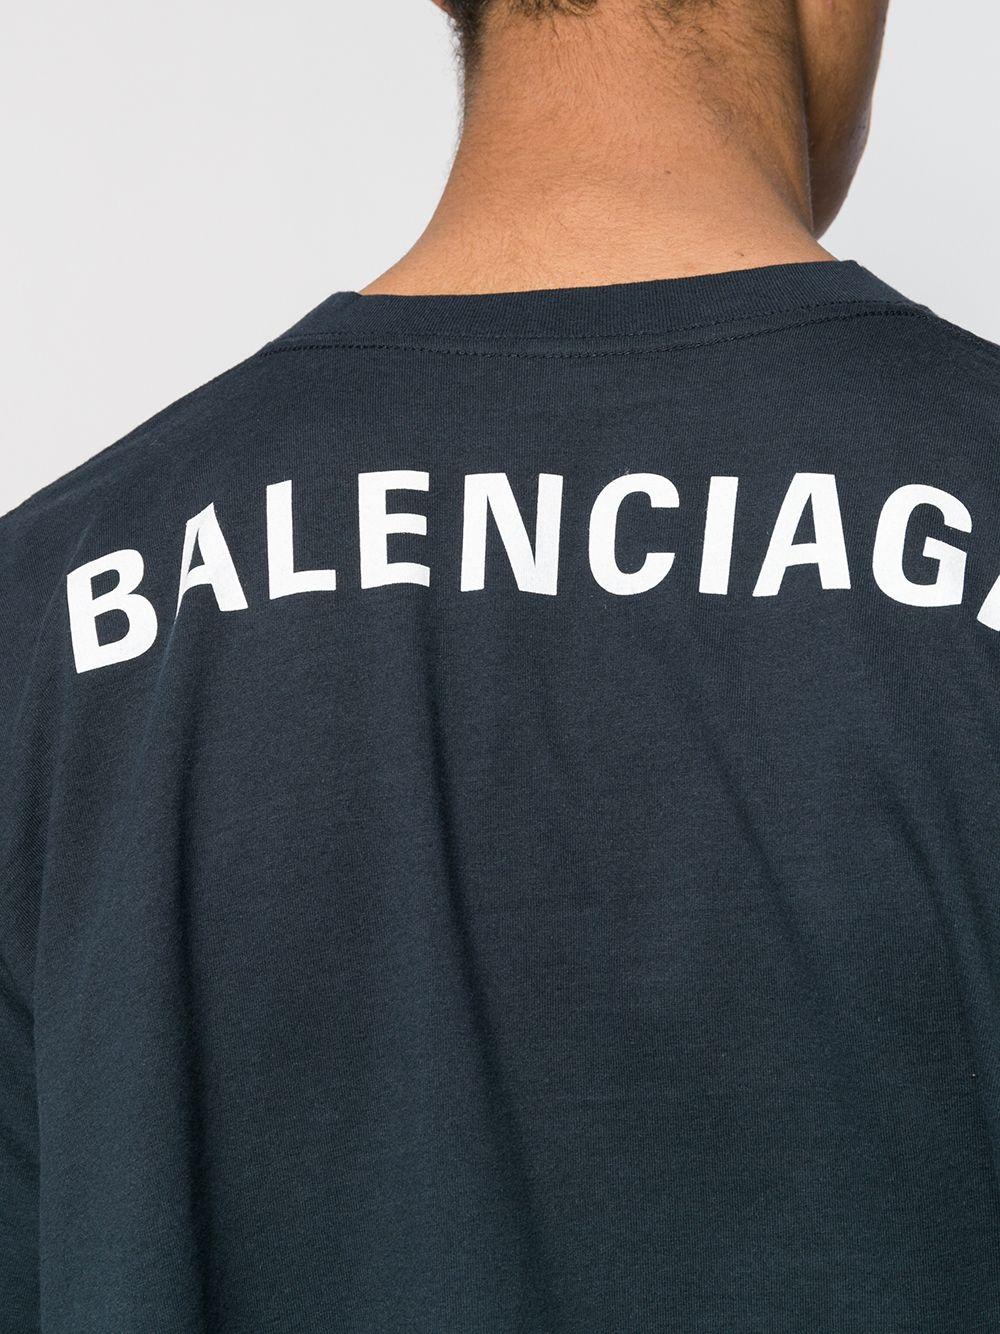 Balenciaga Rear Logo Print Oversize T-shirt in Blue for Men - Lyst